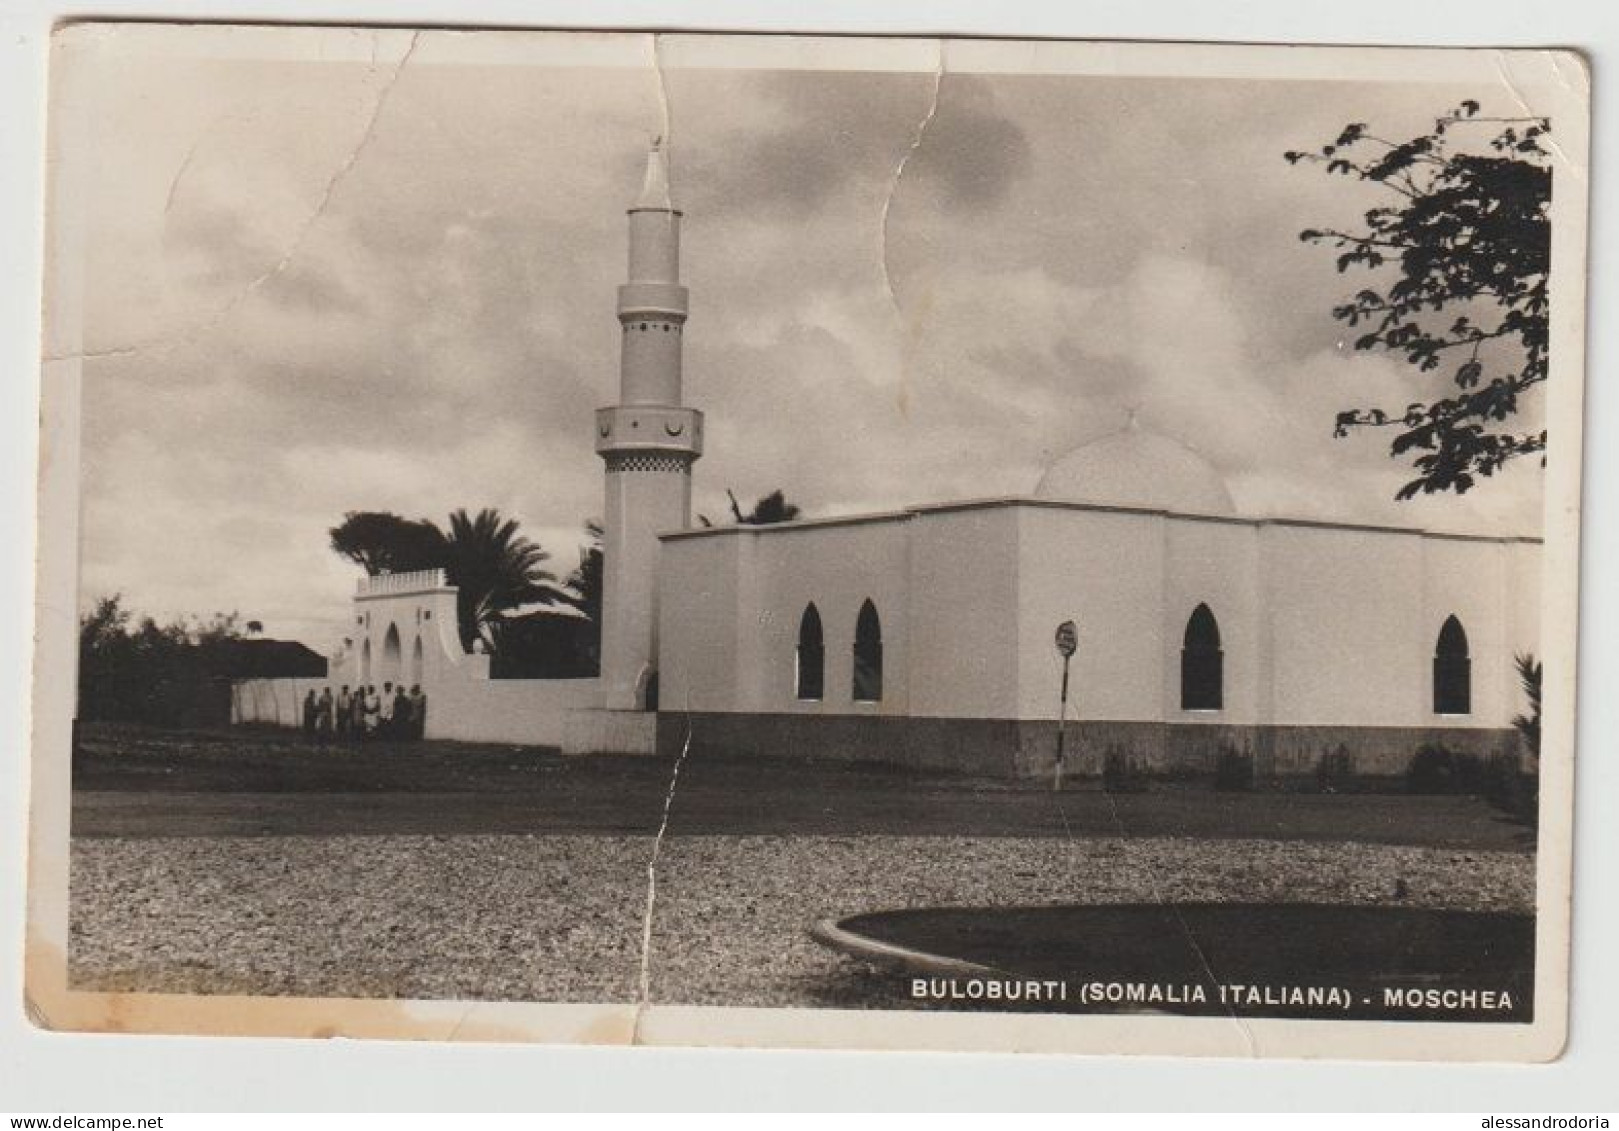 Cartolina Viaggiata Affrancata Francobollo Rimosso Buloburti Bulo Burti Somalia Italiana Moschea 1950 - Somalia